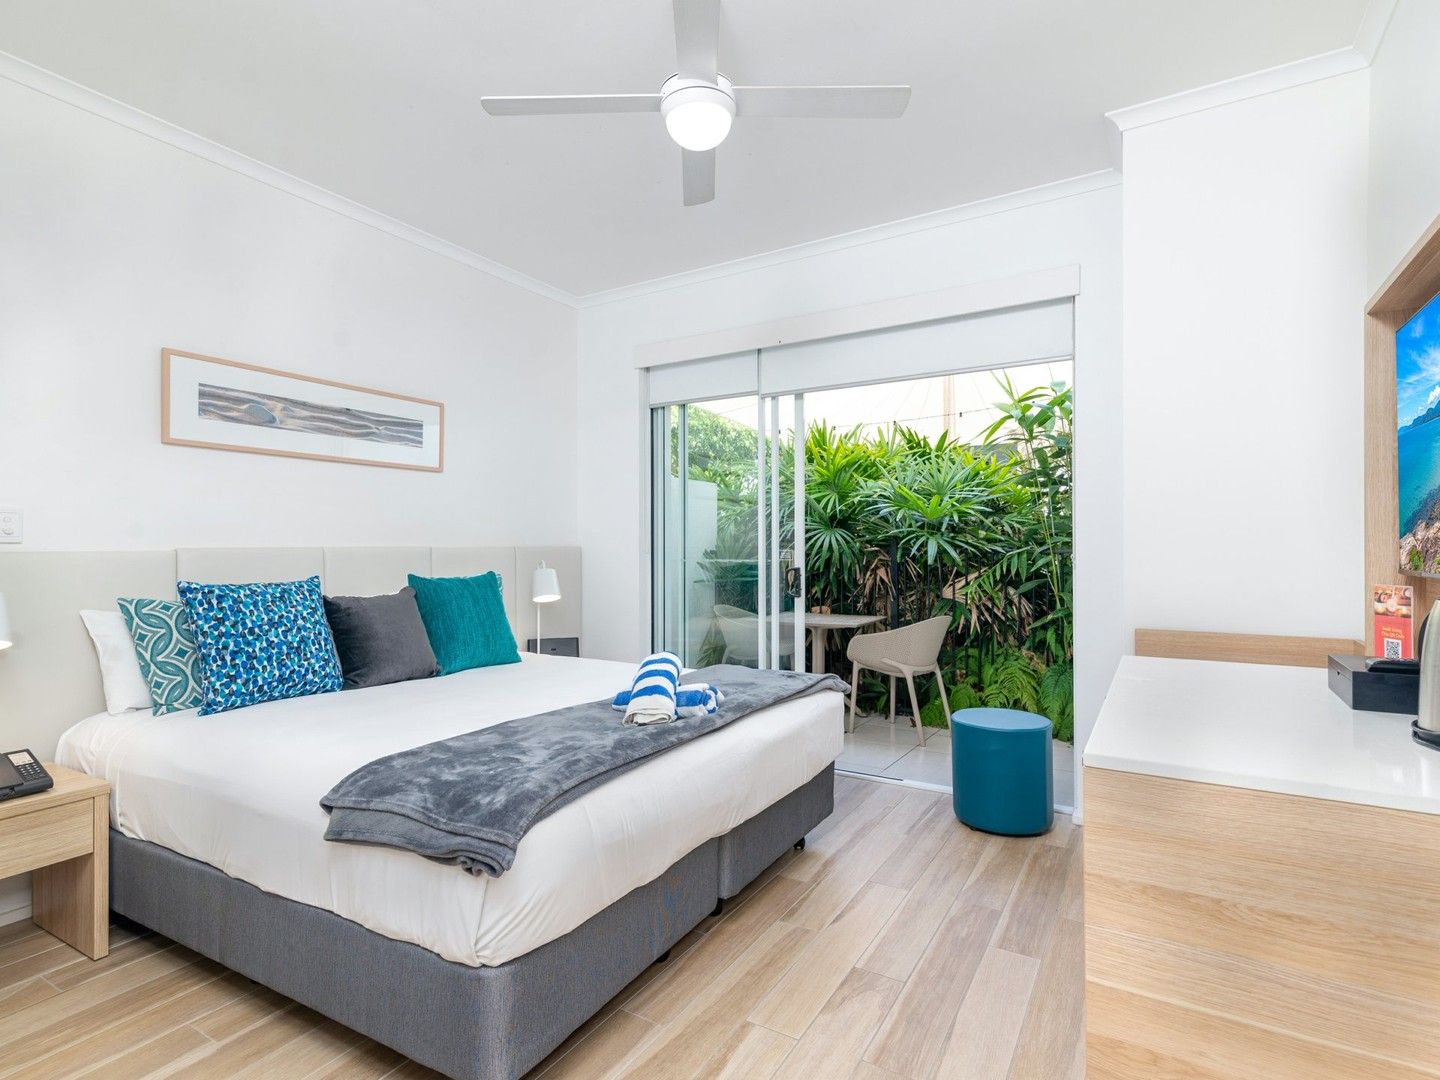 2 bedrooms Apartment / Unit / Flat in 27 Portsea/70-76 Davidson Street PORT DOUGLAS QLD, 4877